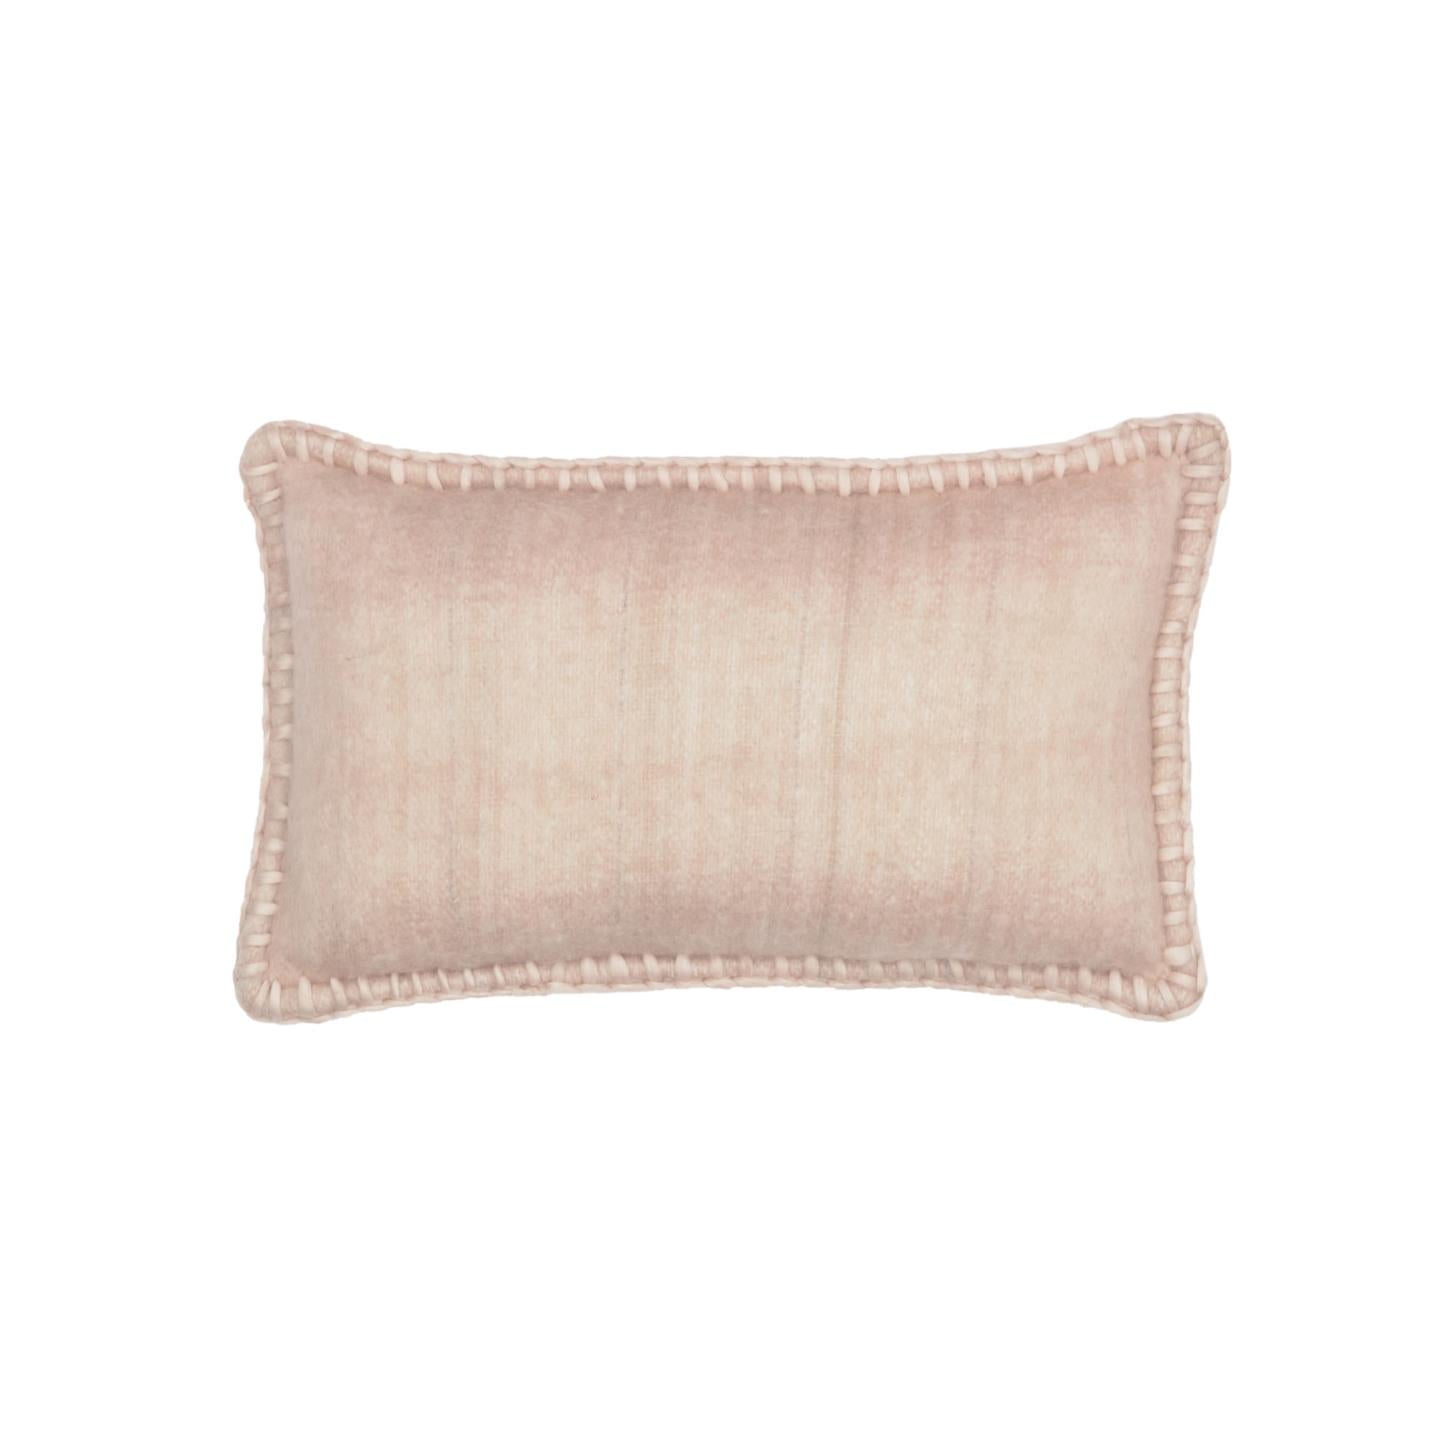 Augustina pink cushion cover 30 x 50 cm